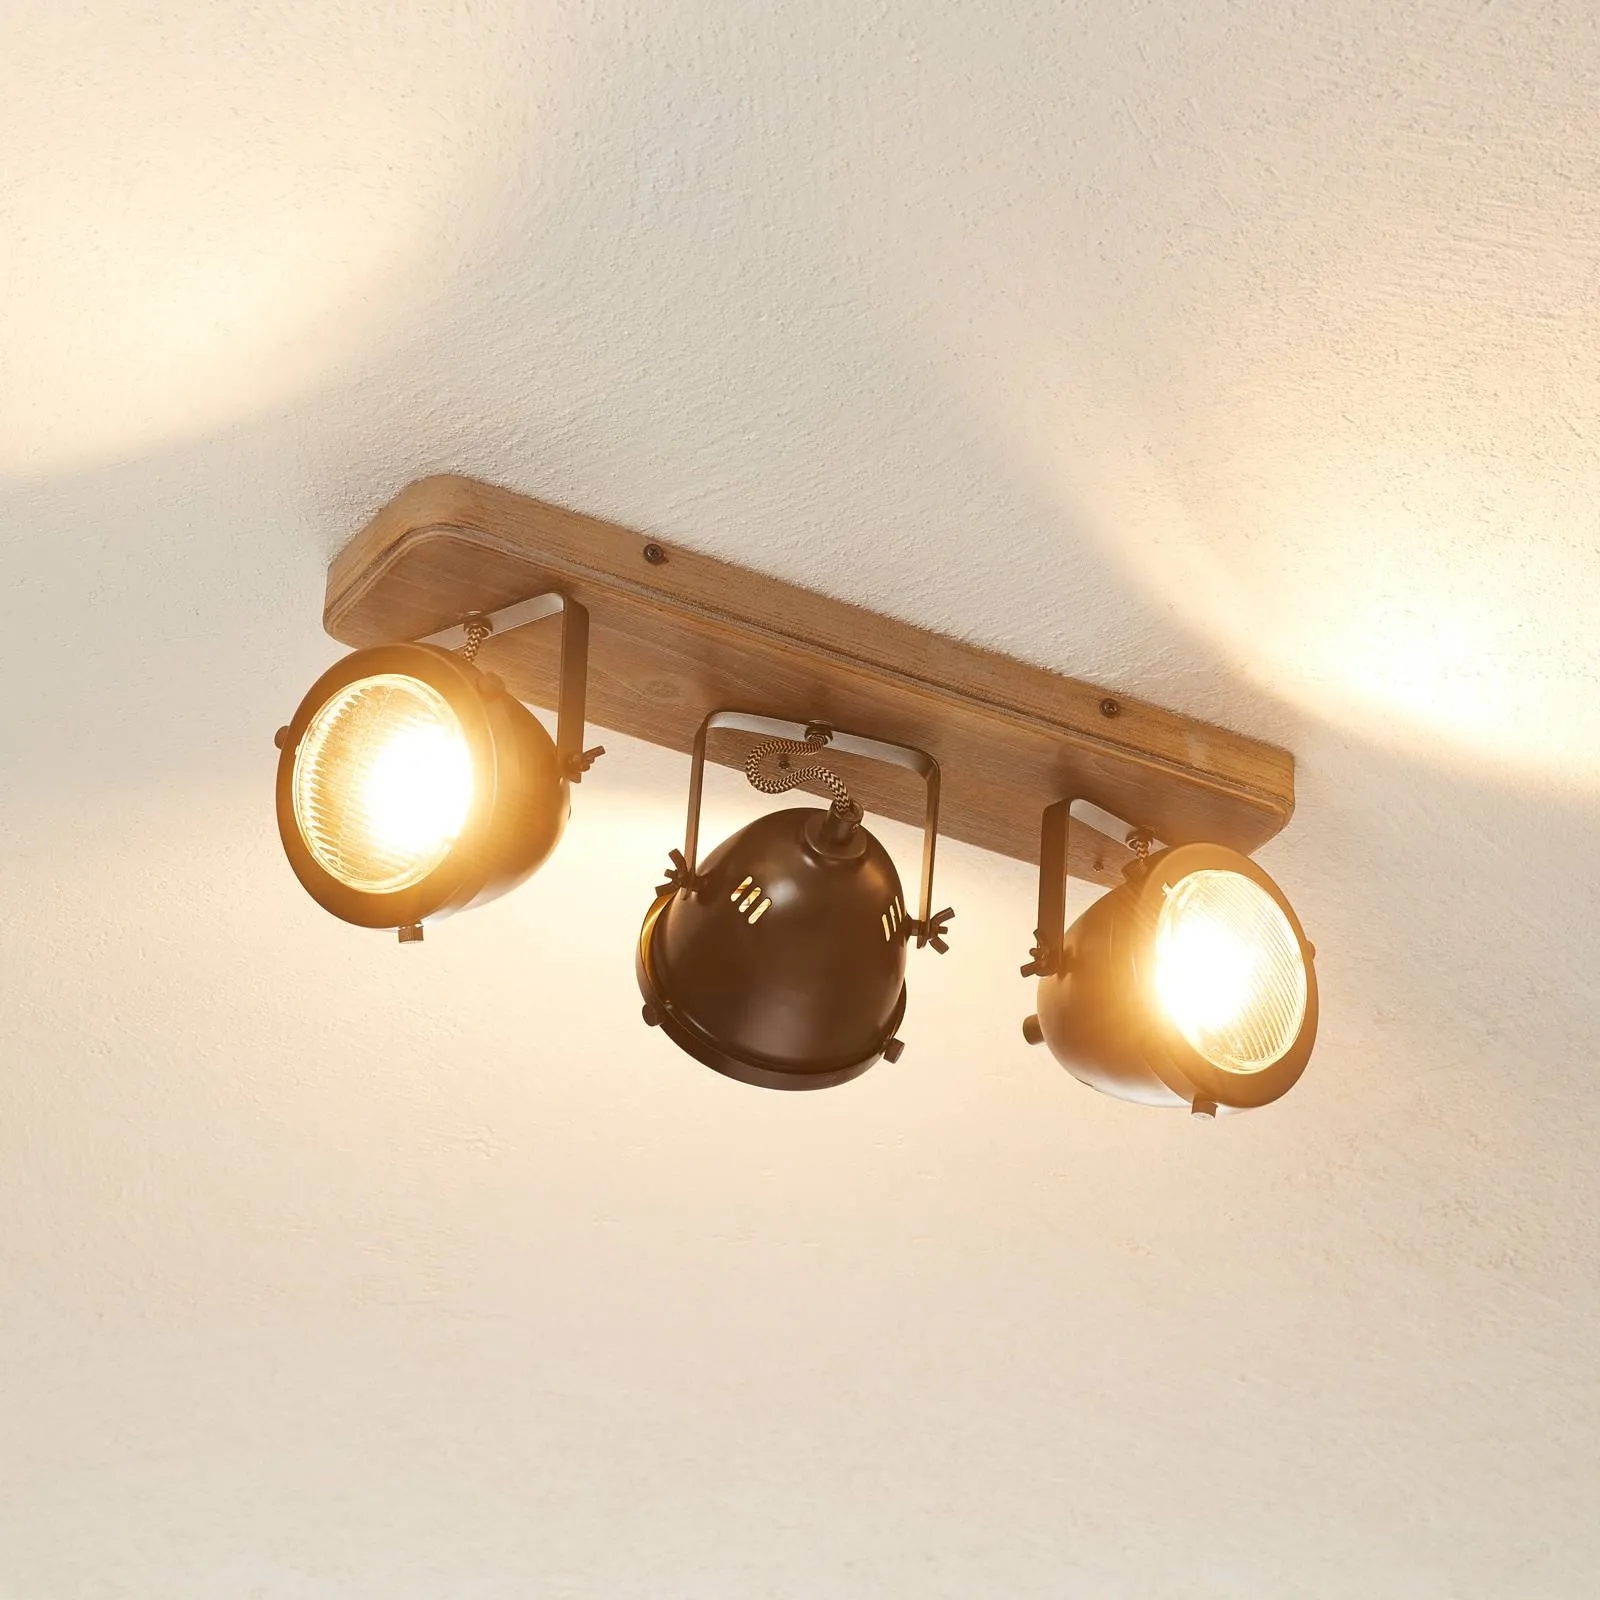 Ceiling light Carmen Wood industrial style 3-bulb